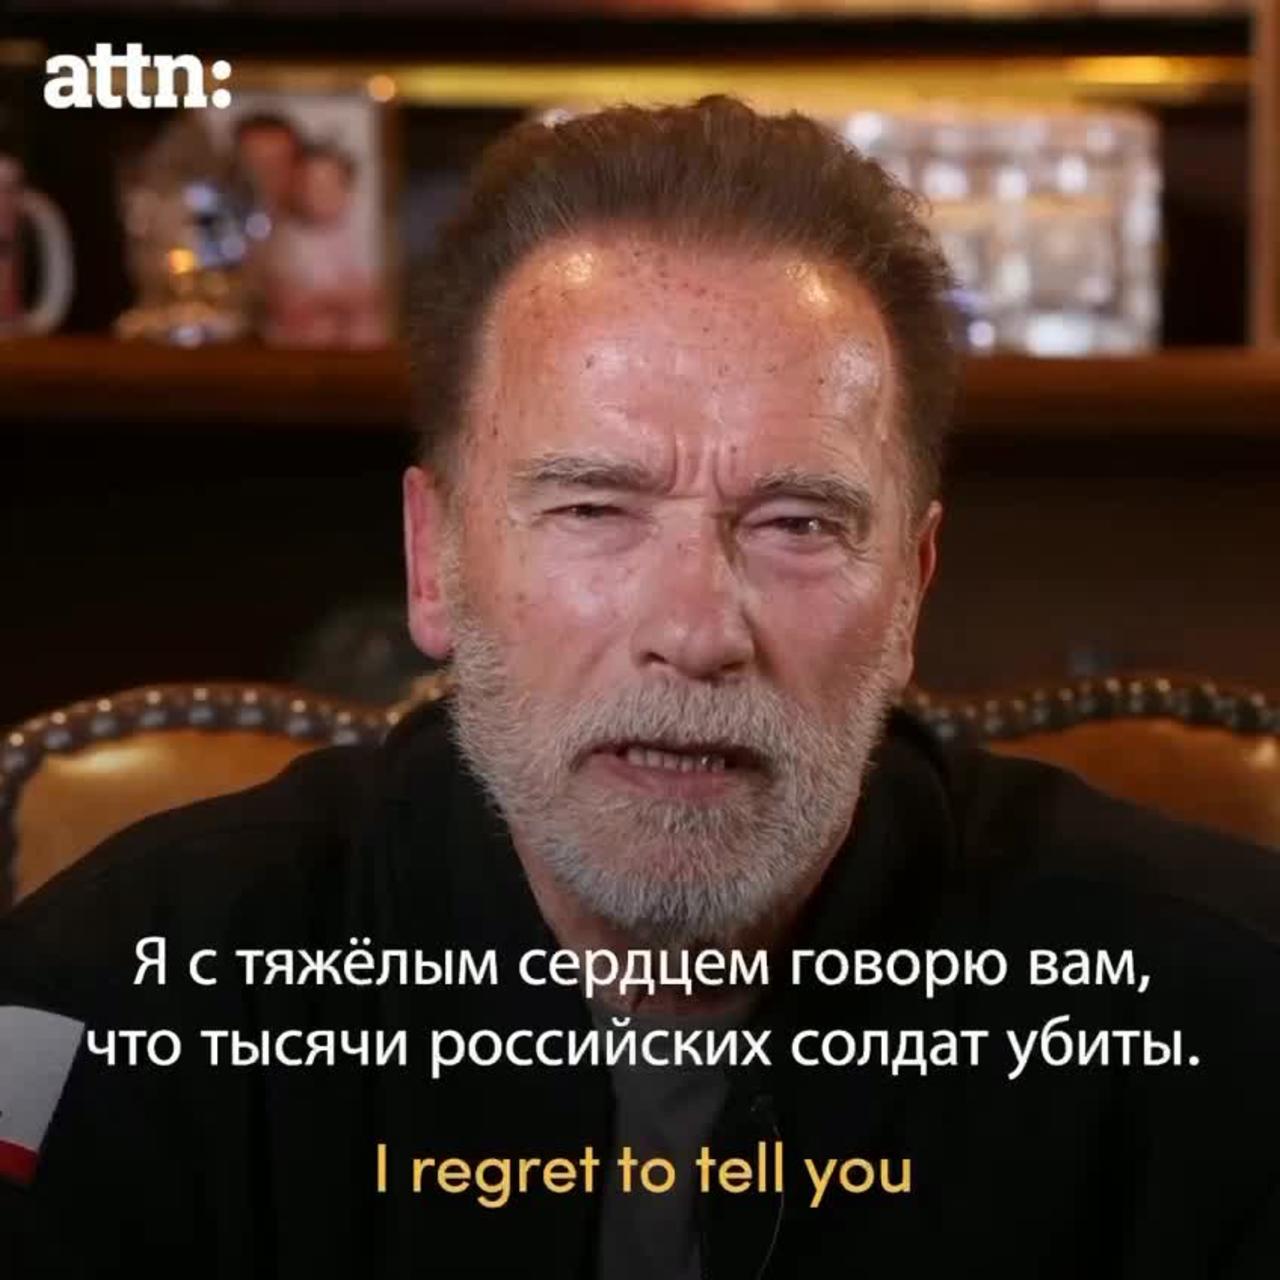 Arnold Schwarzenegger vs Russian powerlifter Maryana Naumova. Discussion of the situation in Ukraine